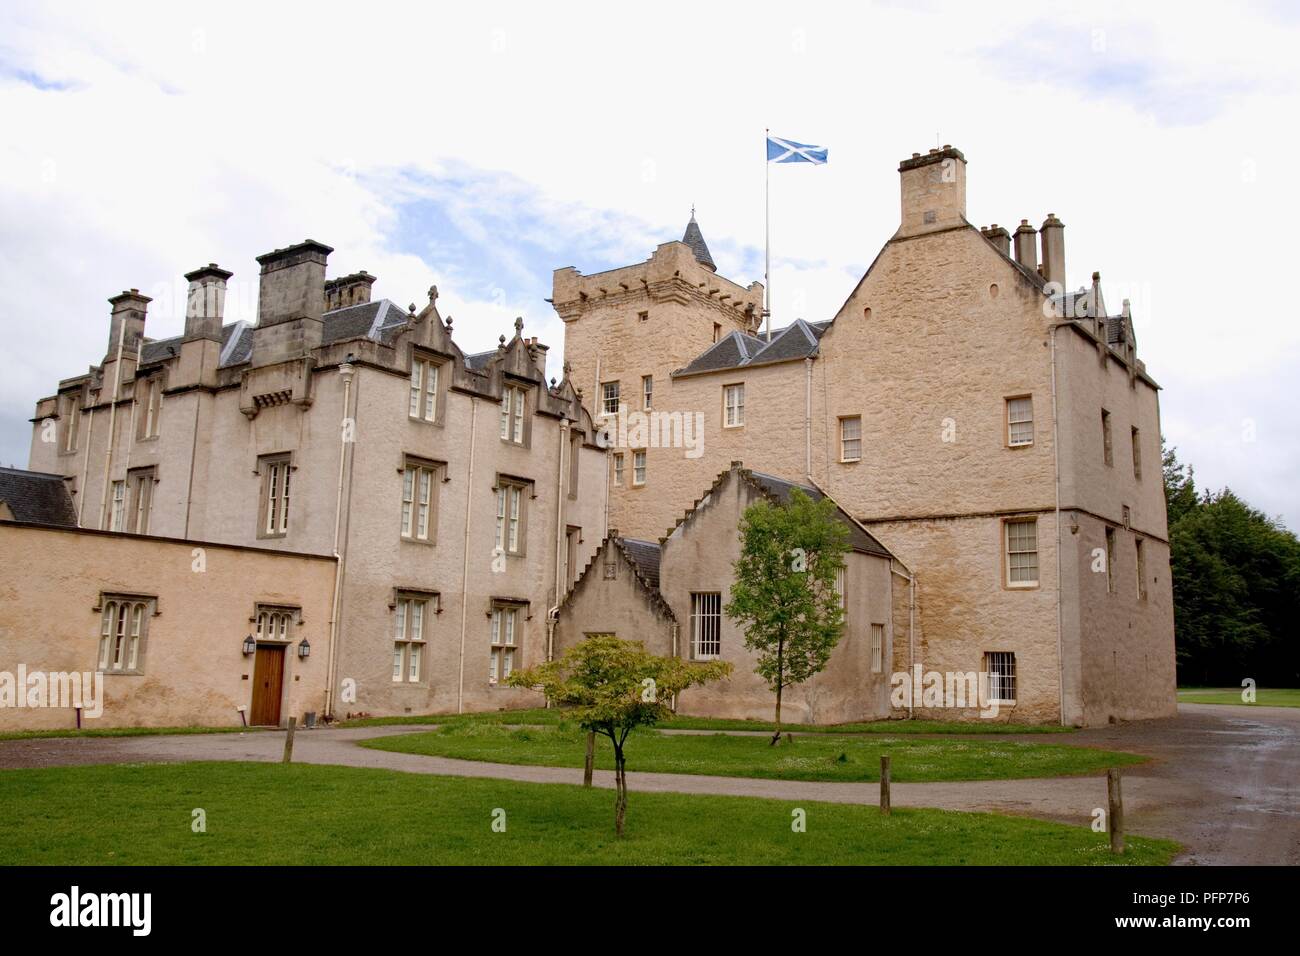 Escocia, Moray, Brodie Castle, con fachada de castillo del siglo XVI Foto de stock